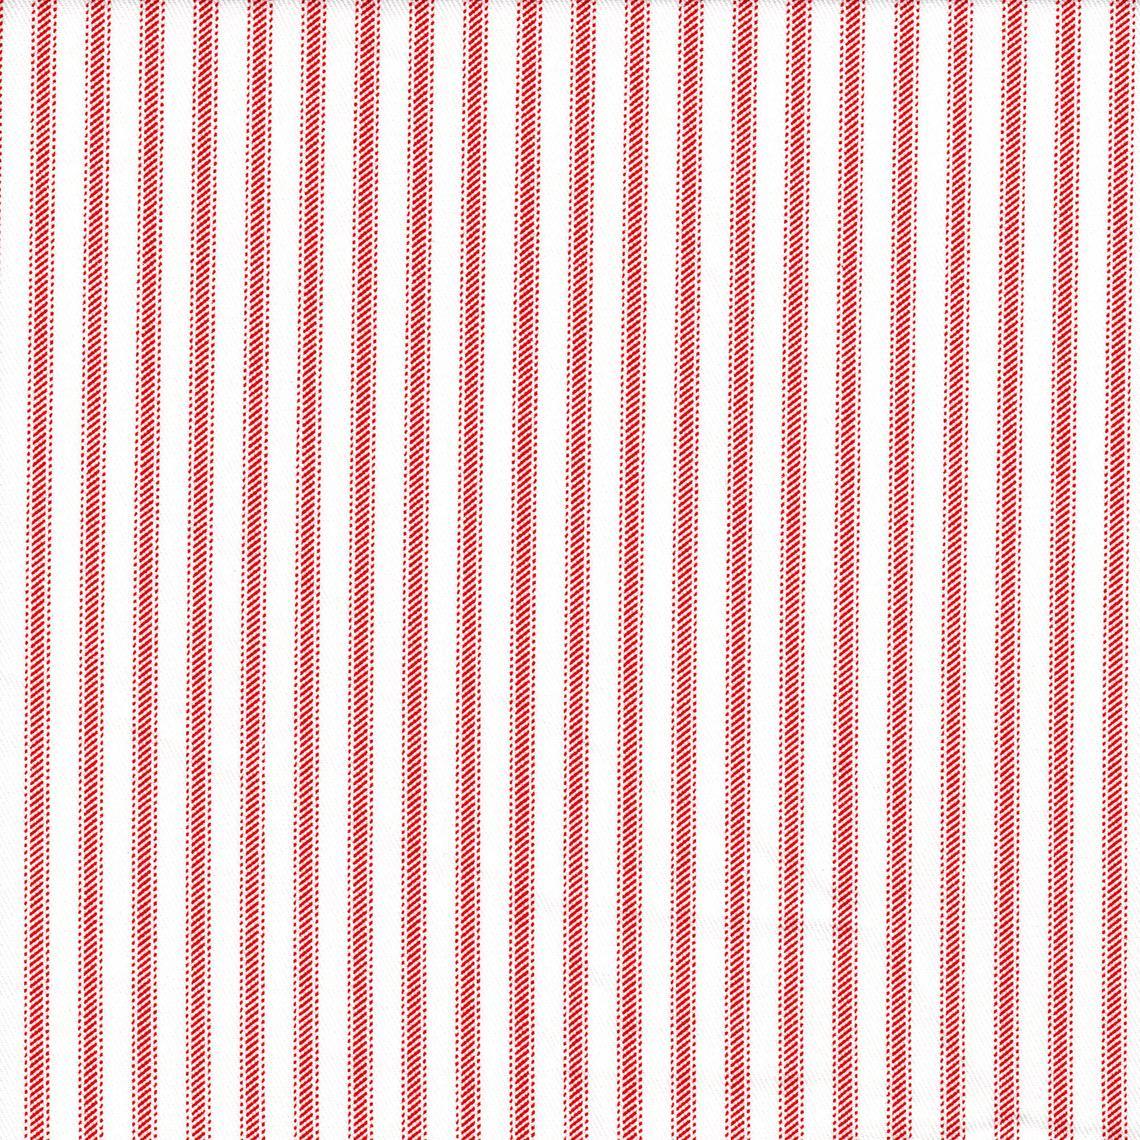 gathered crib skirt in classic lipstick red ticking stripe on white